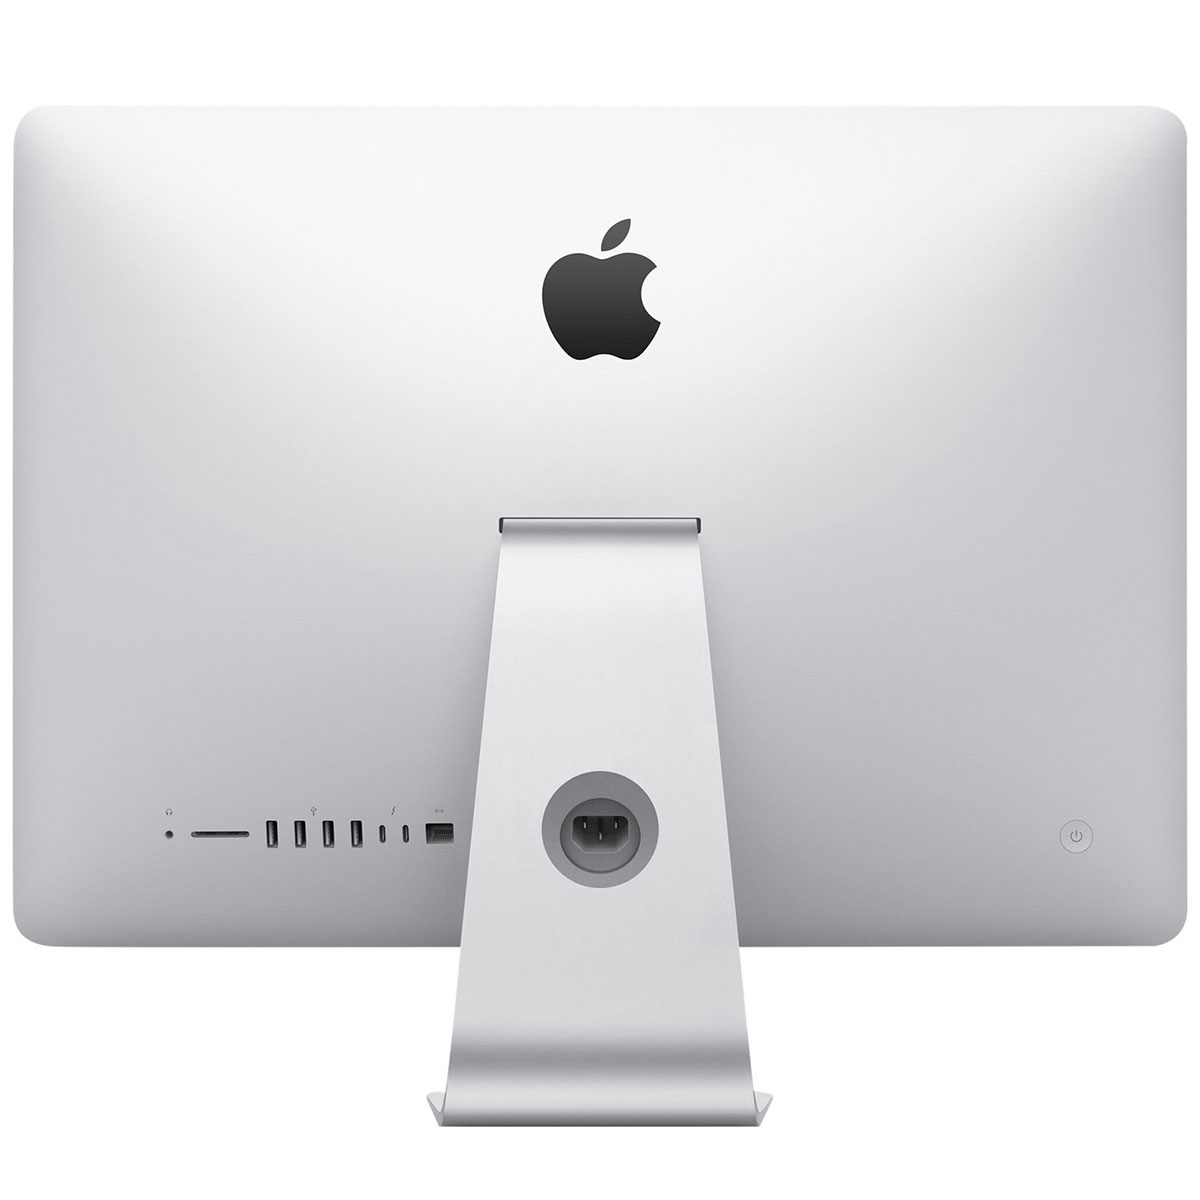 iMac with Retina 5K display - Apple